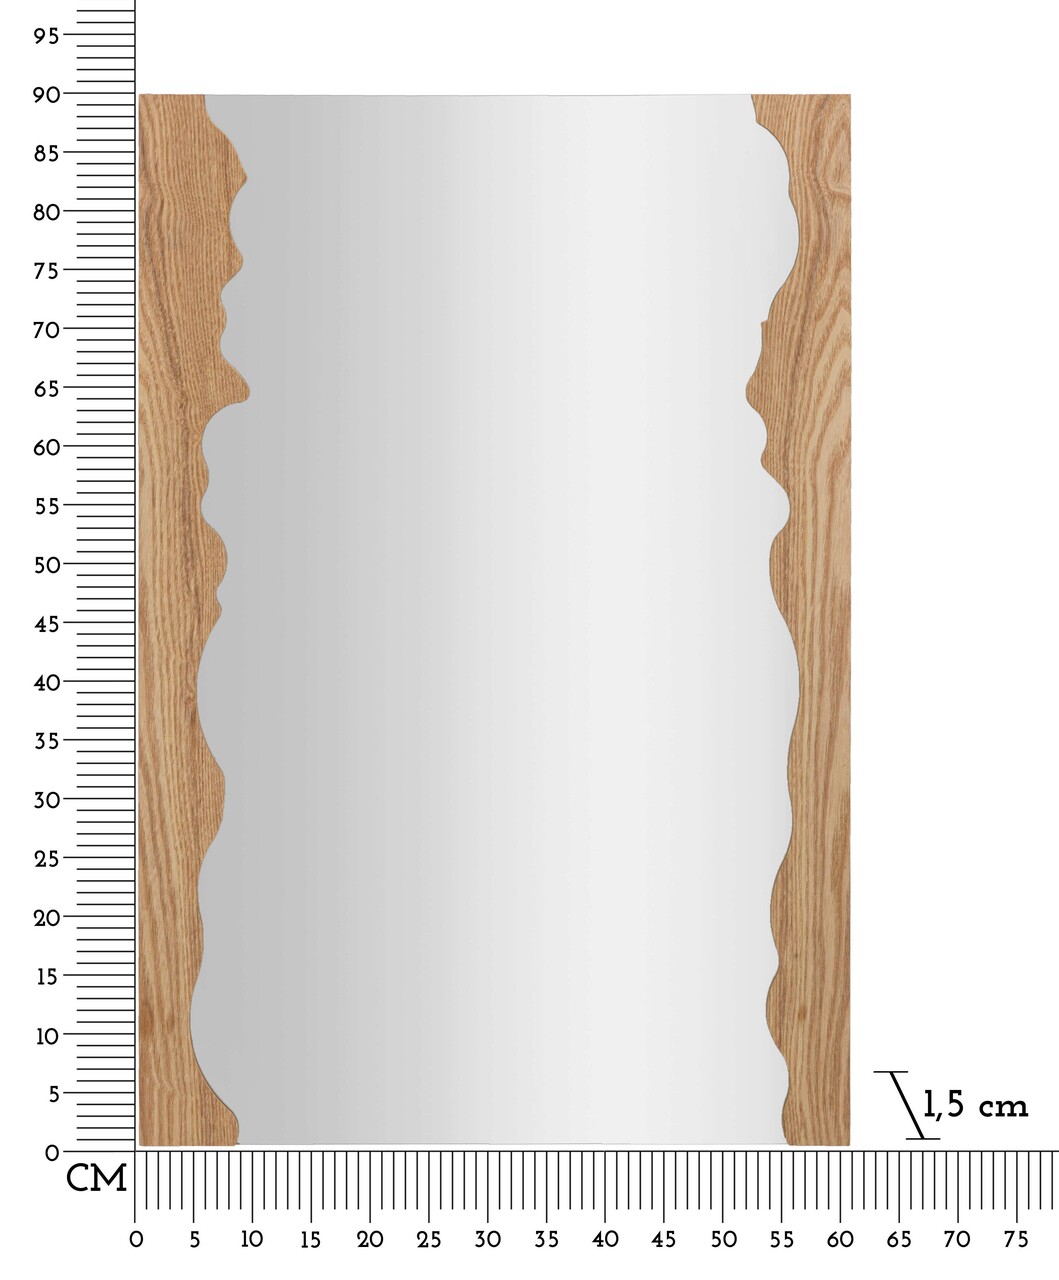 Oglinda decorativa Shape, Mauro Ferretti, 60x90 cm, MDF/sticla, natural